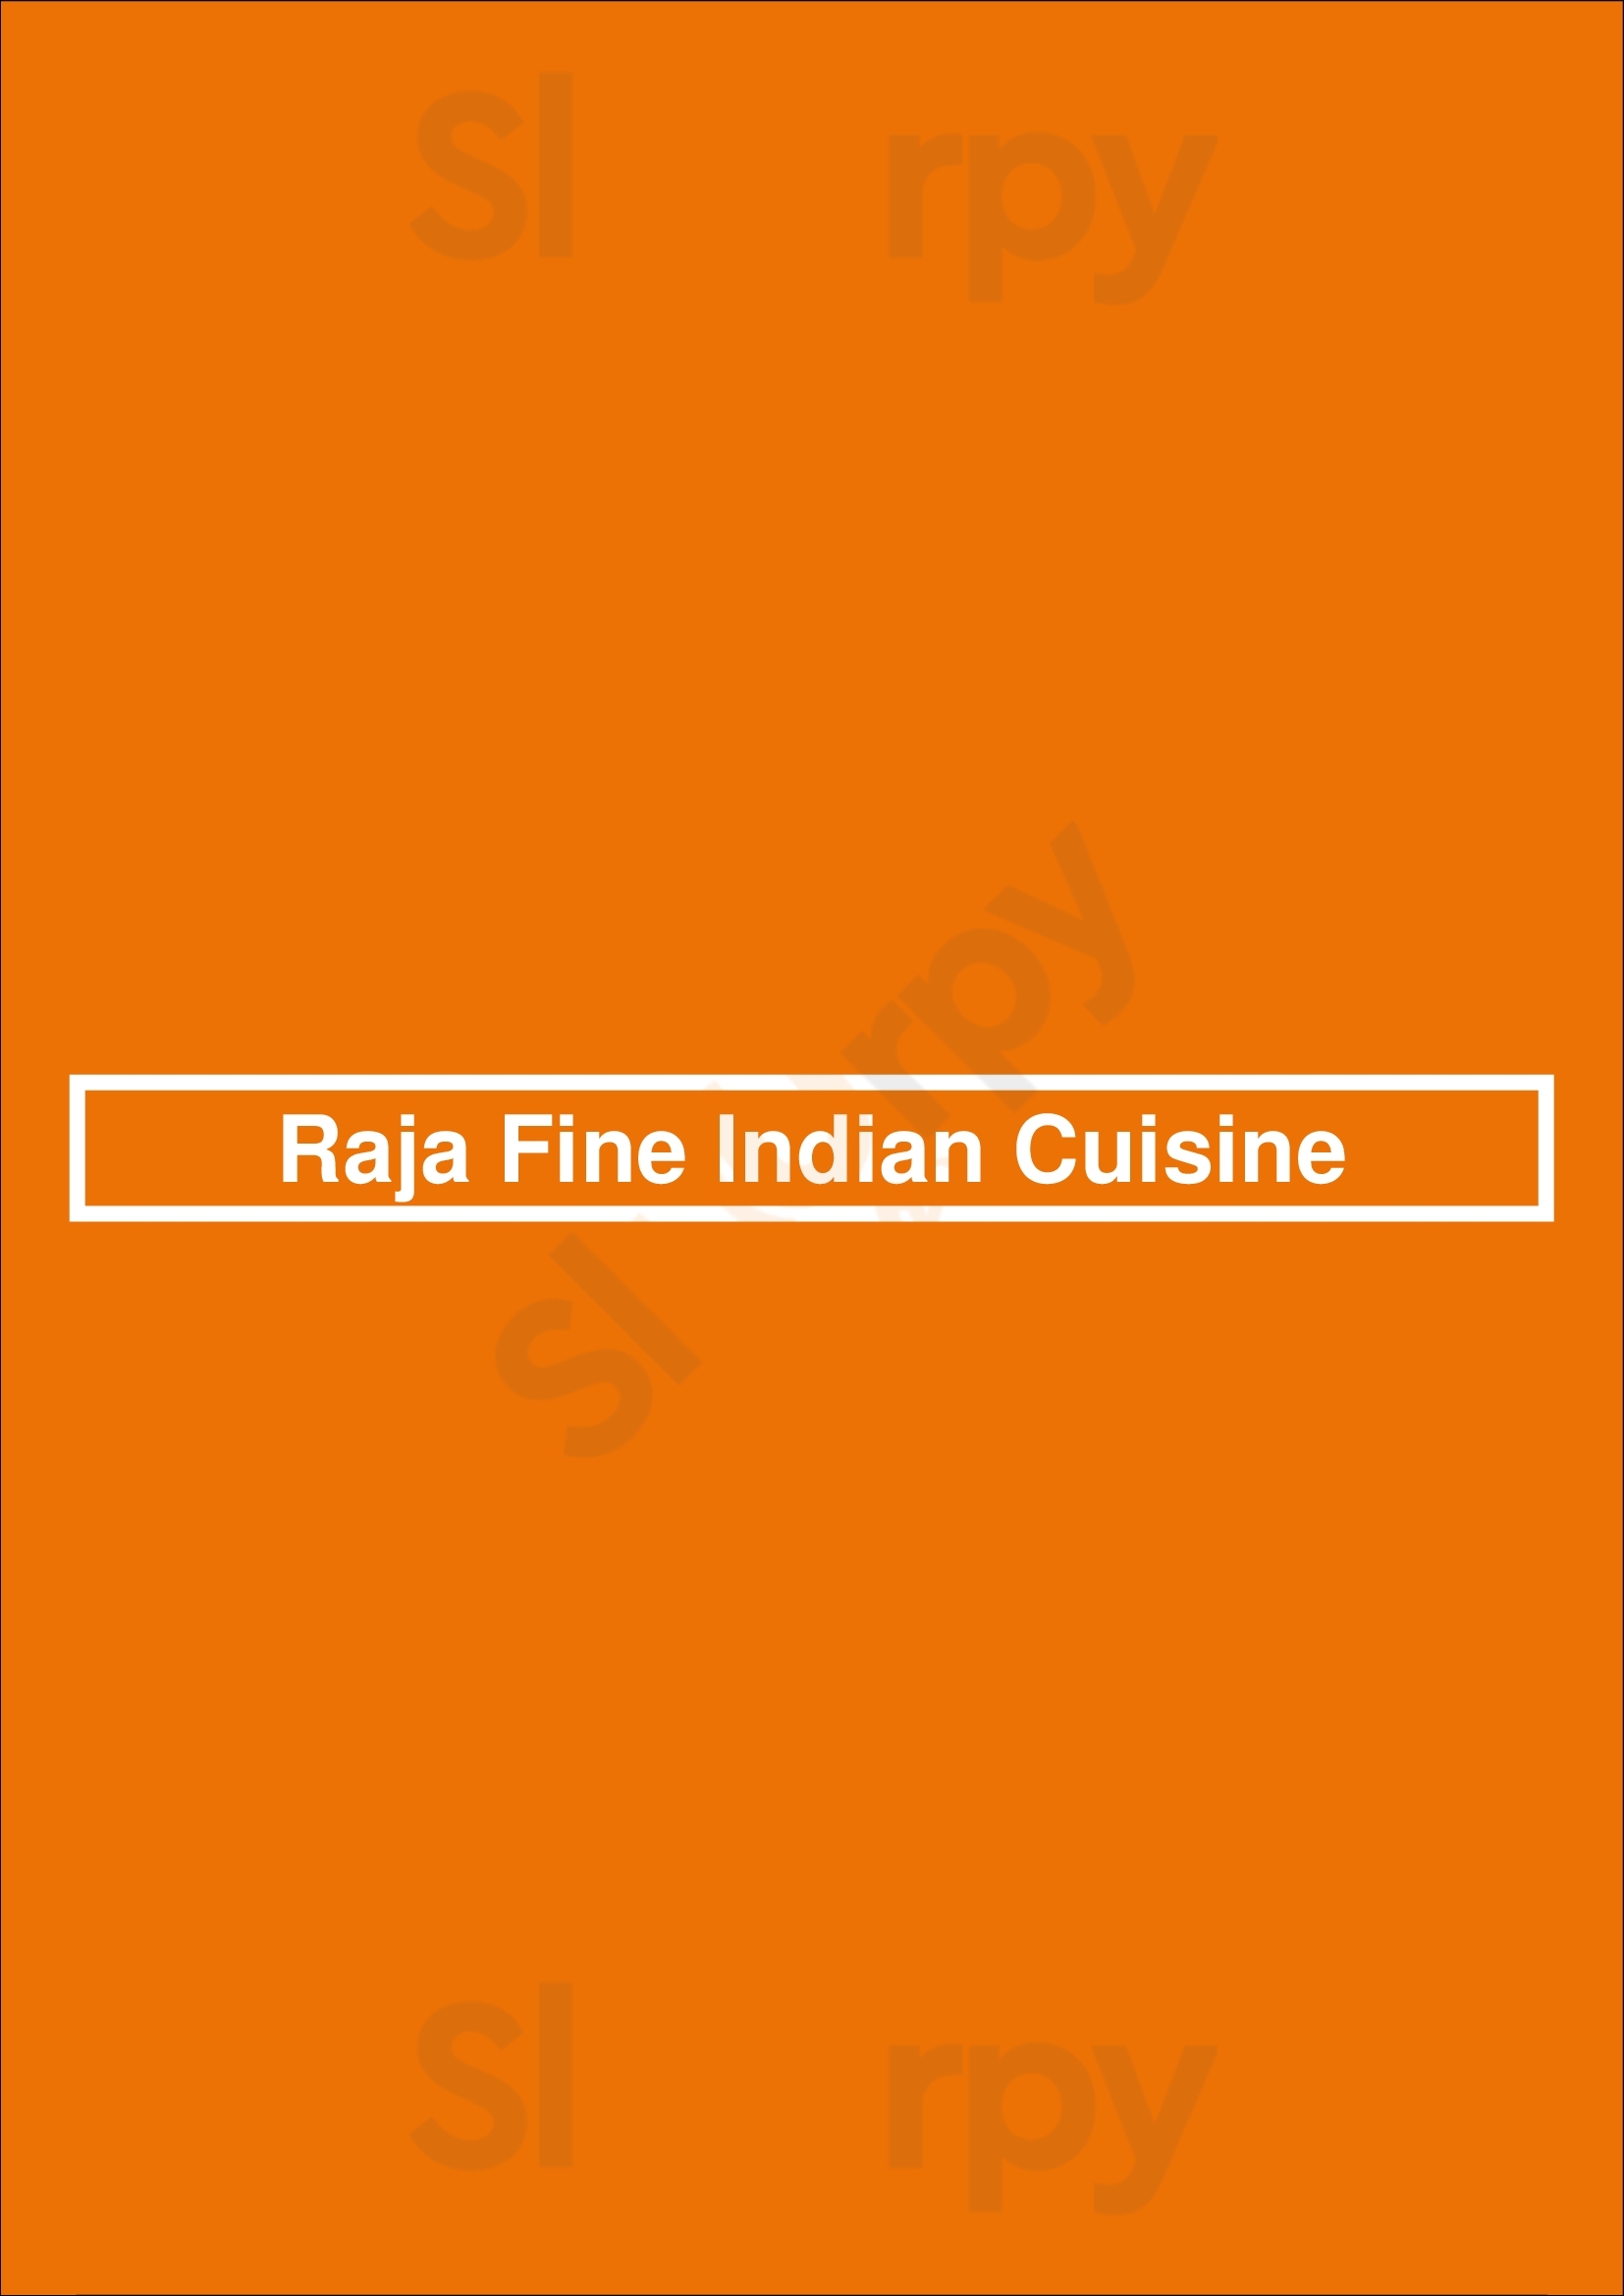 Raja Fine Indian Cuisine Kitchener Menu - 1